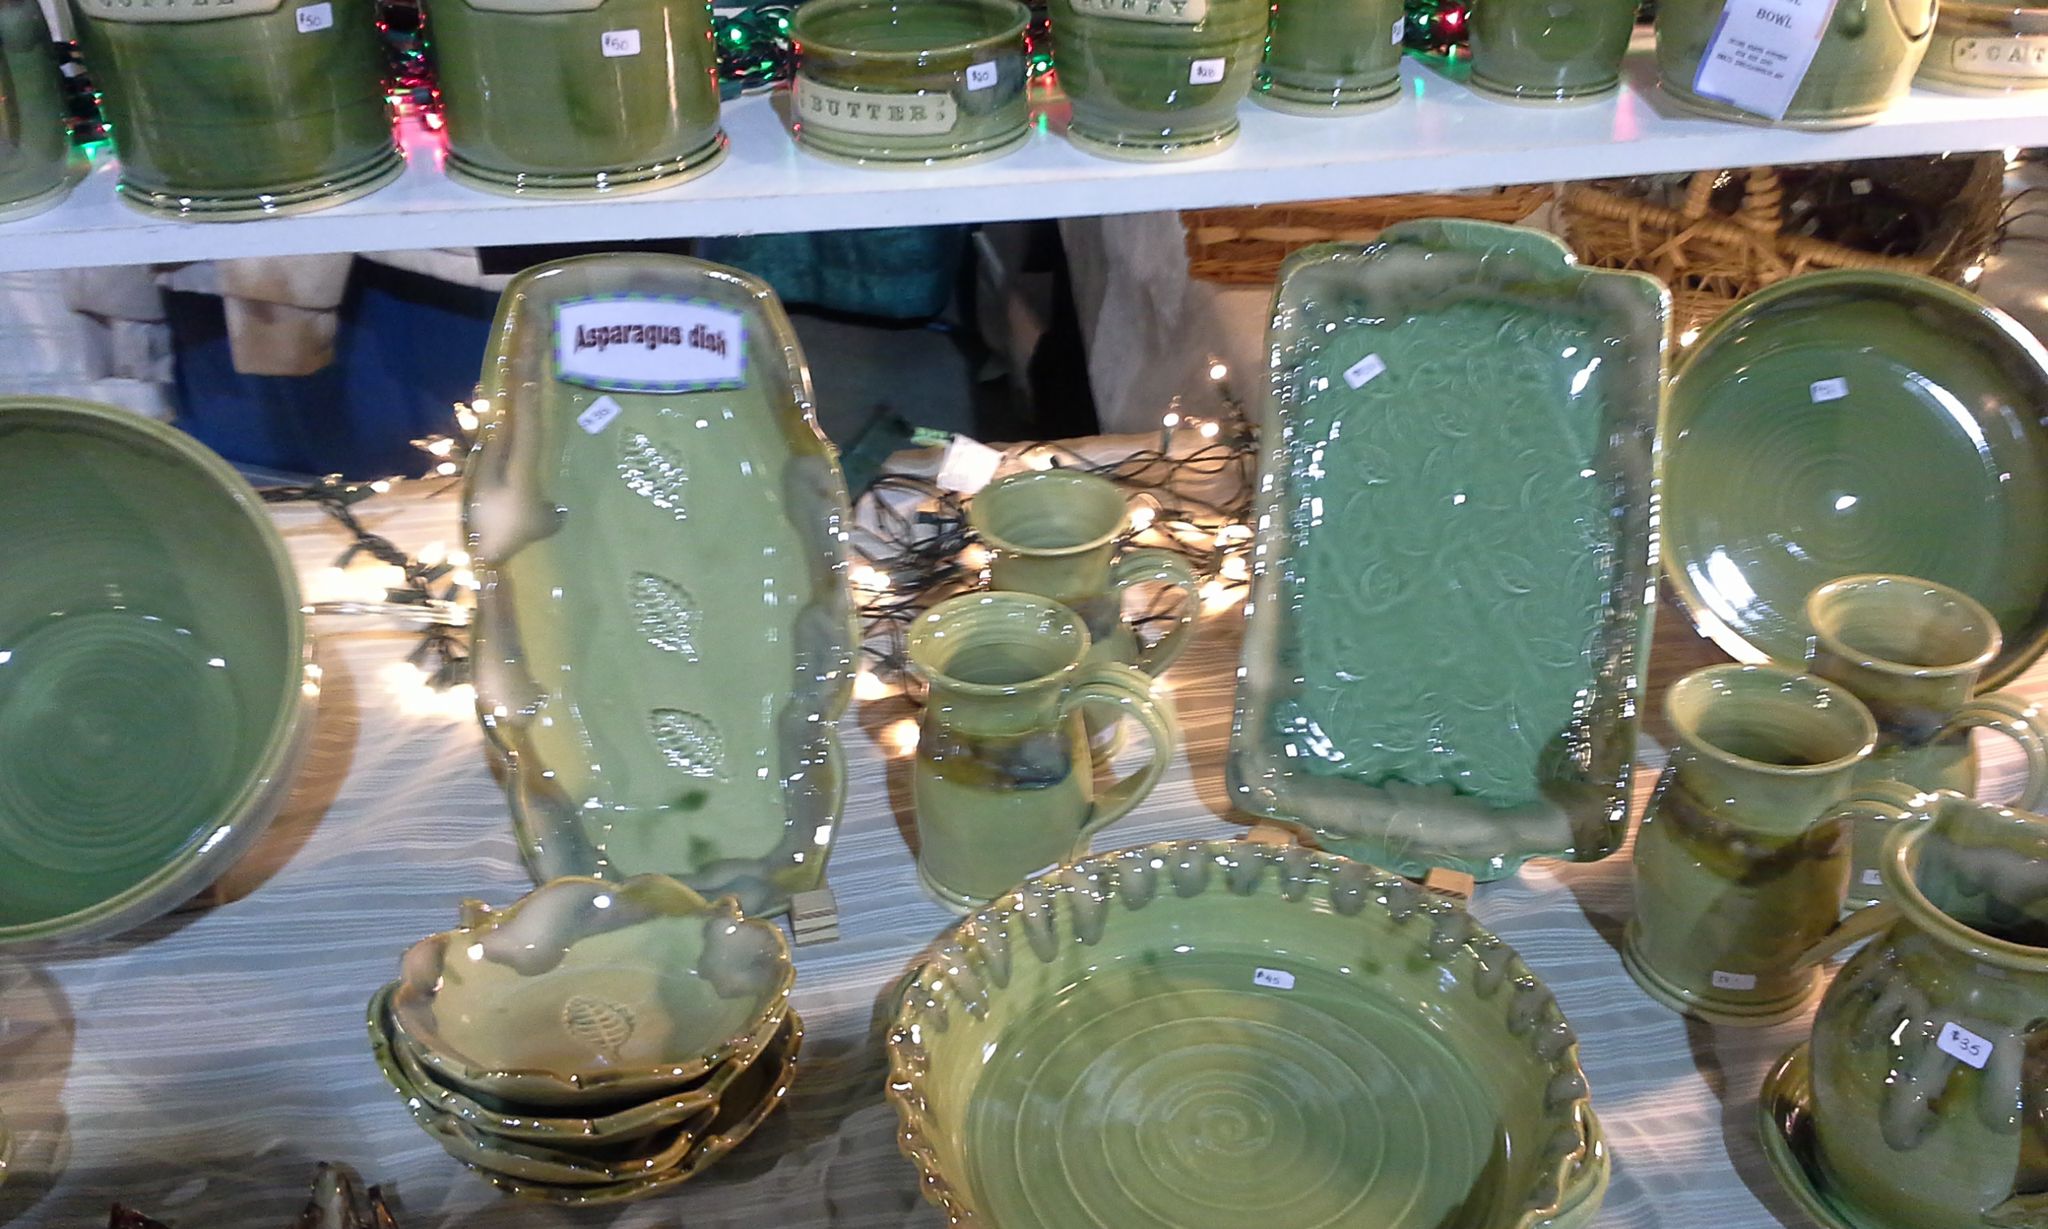 Dazling Green pottery